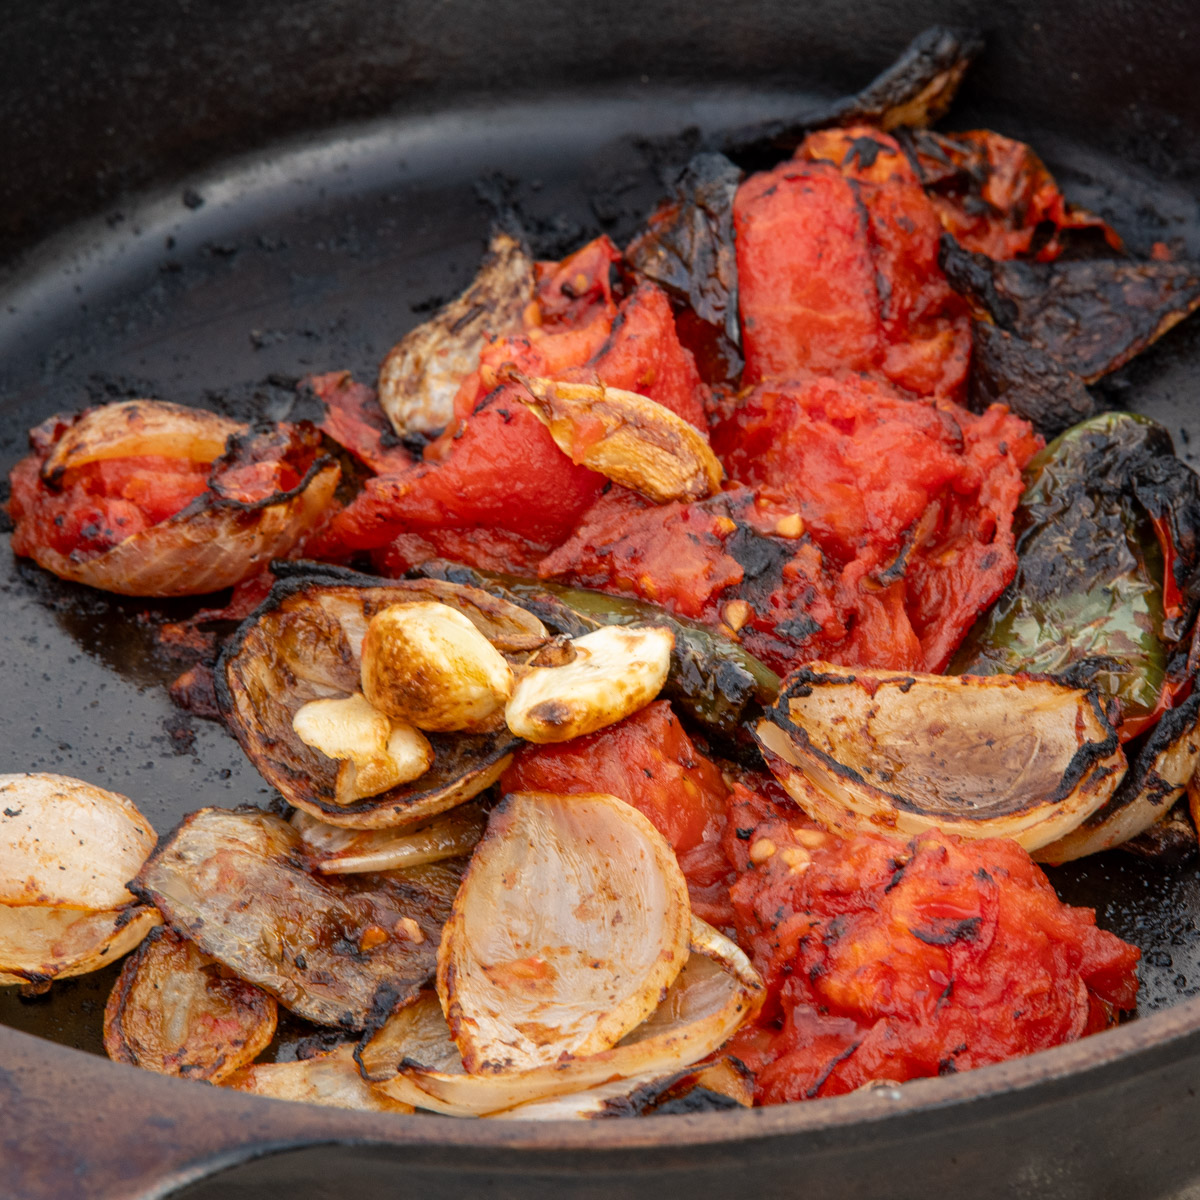 Roasted vegetables for fire-roasted salsa.